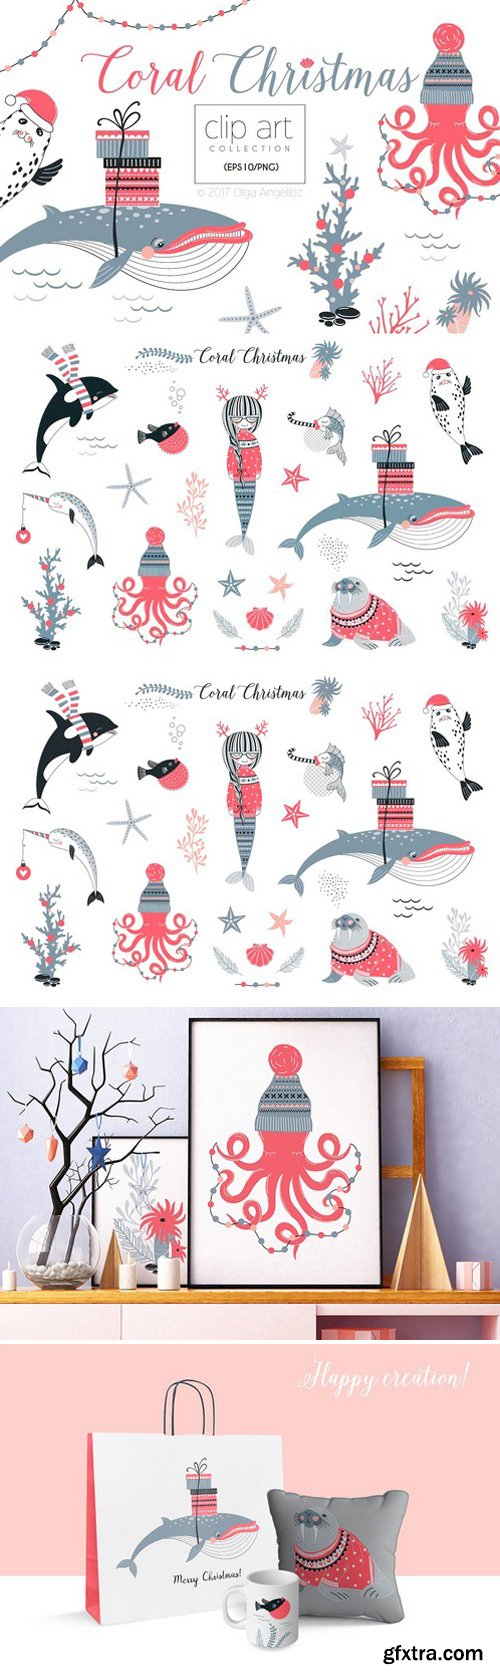 CM - Coral Christmas clip art collection 2057034